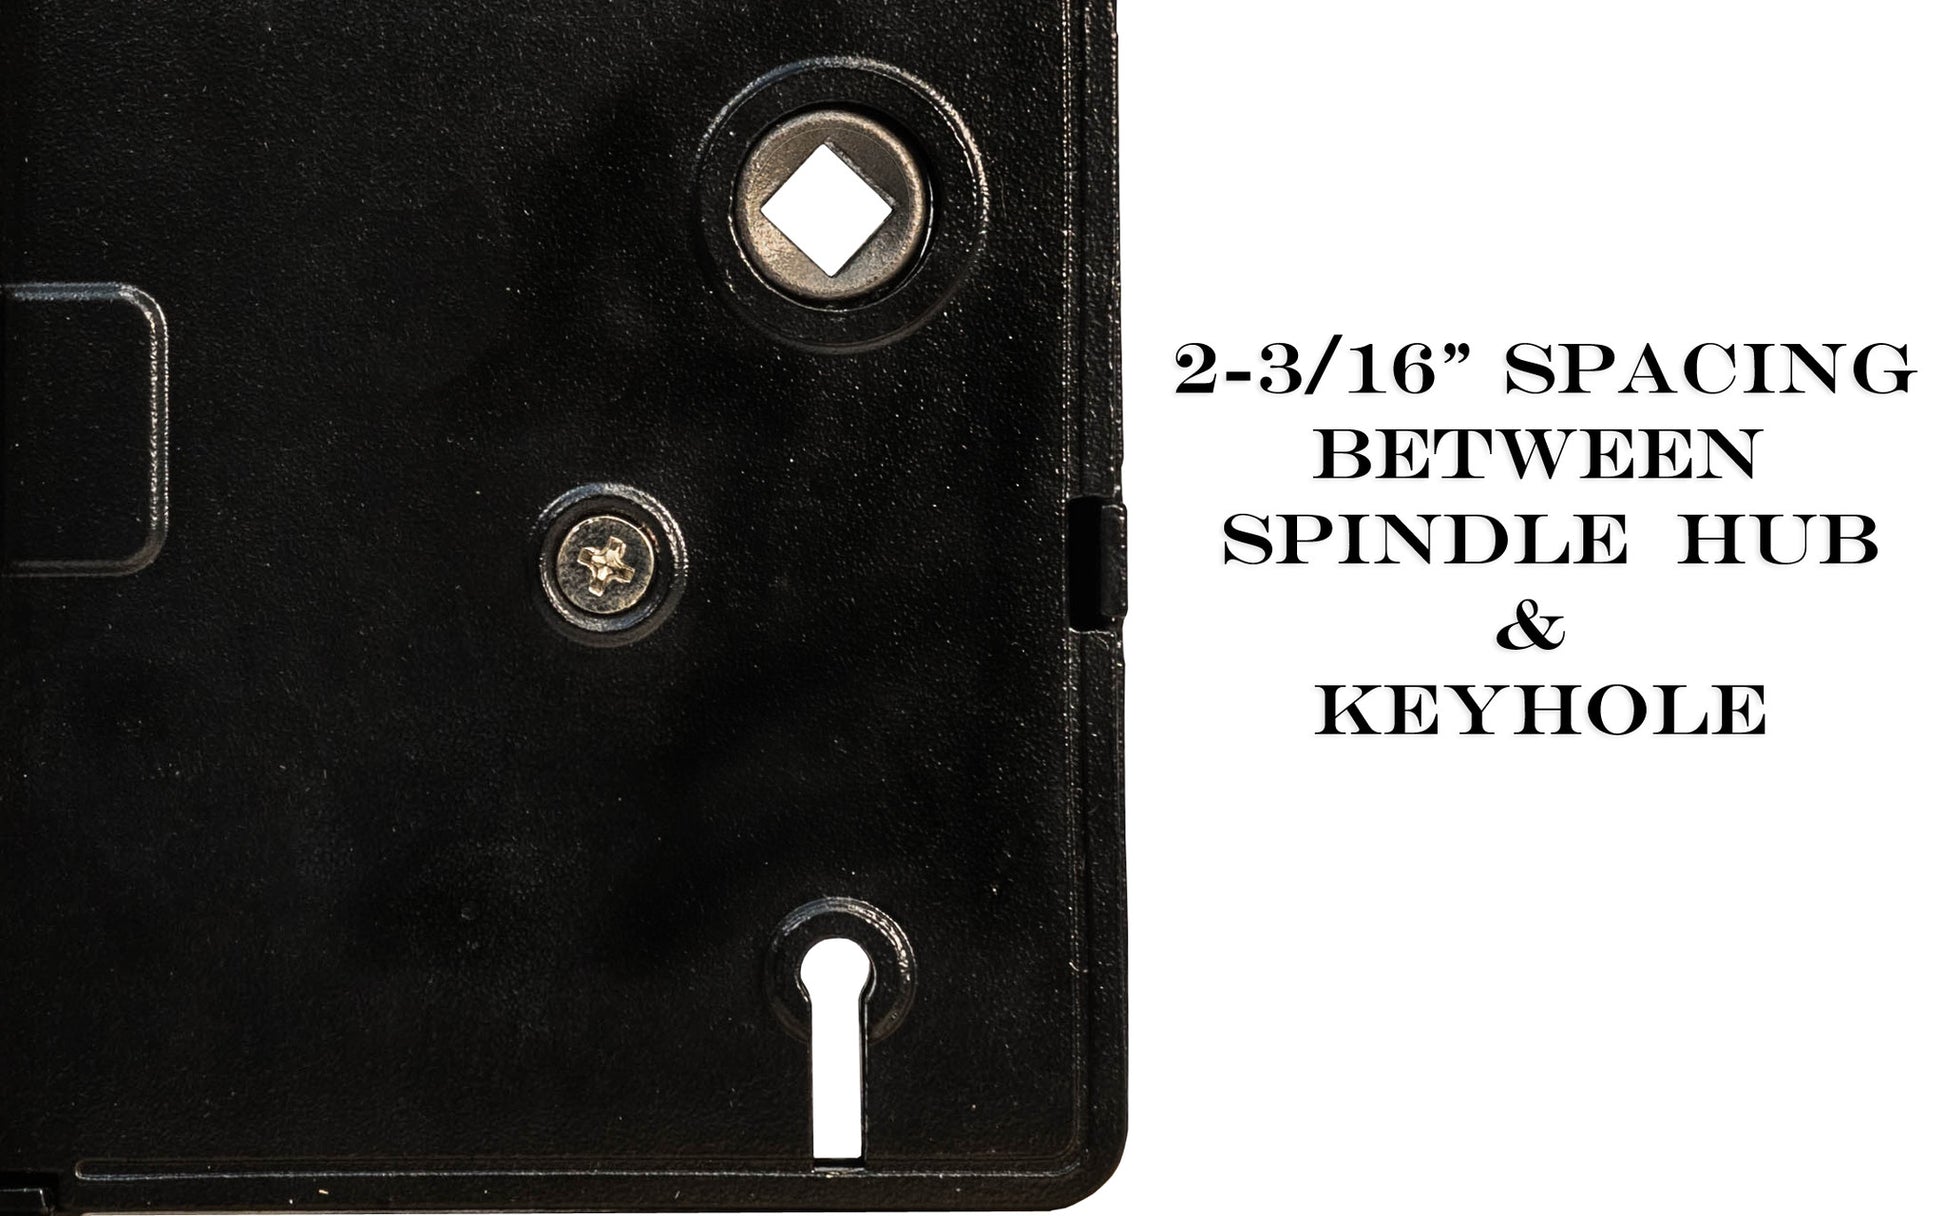 Closeup of Spindle Hub & Keyhole